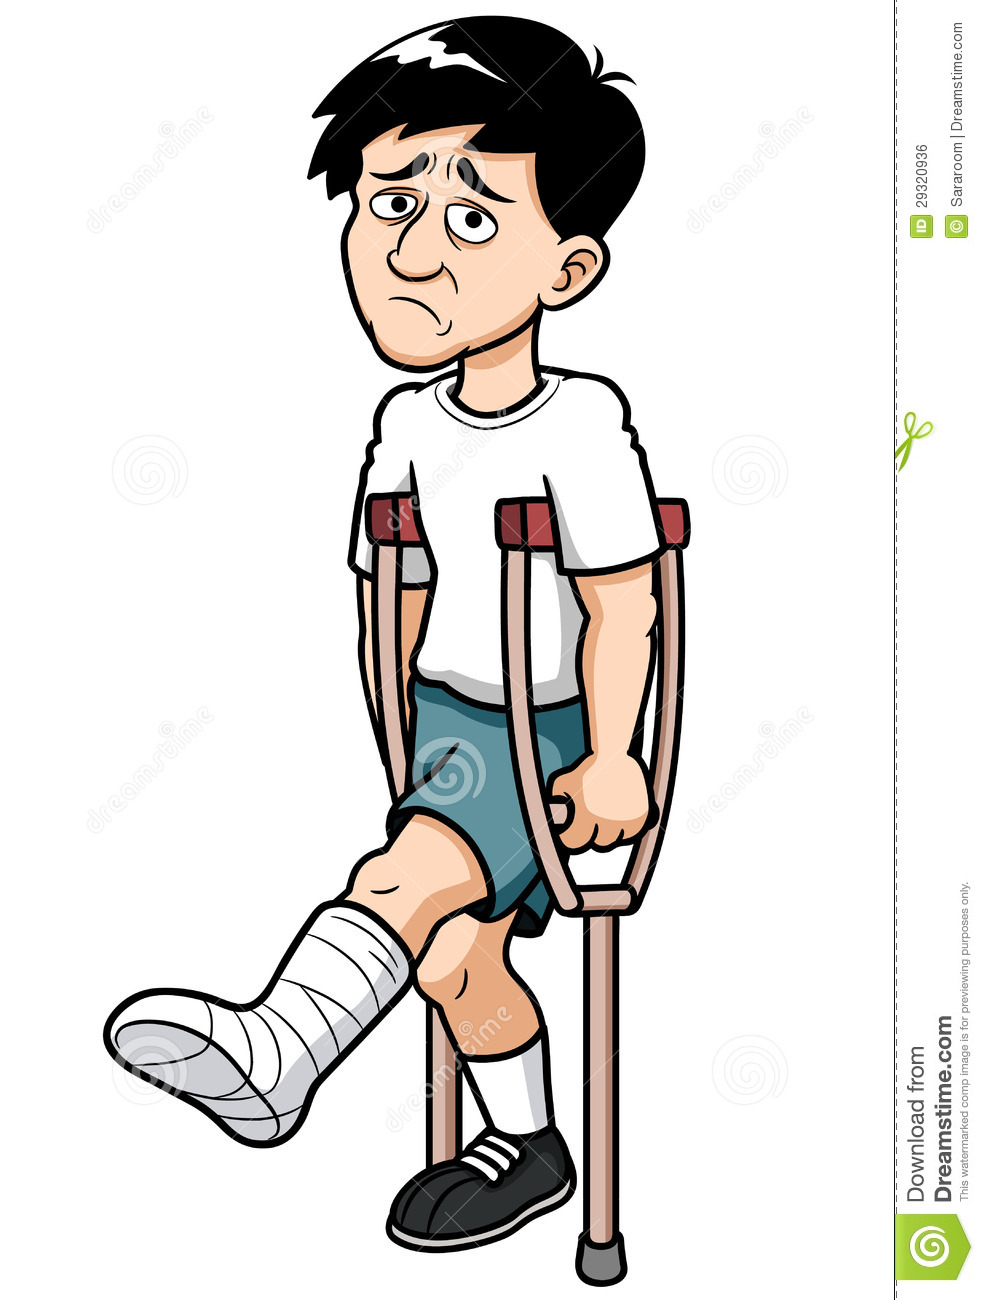 Man With A Broken Leg Royalty Free Stock Image   Image  29320936